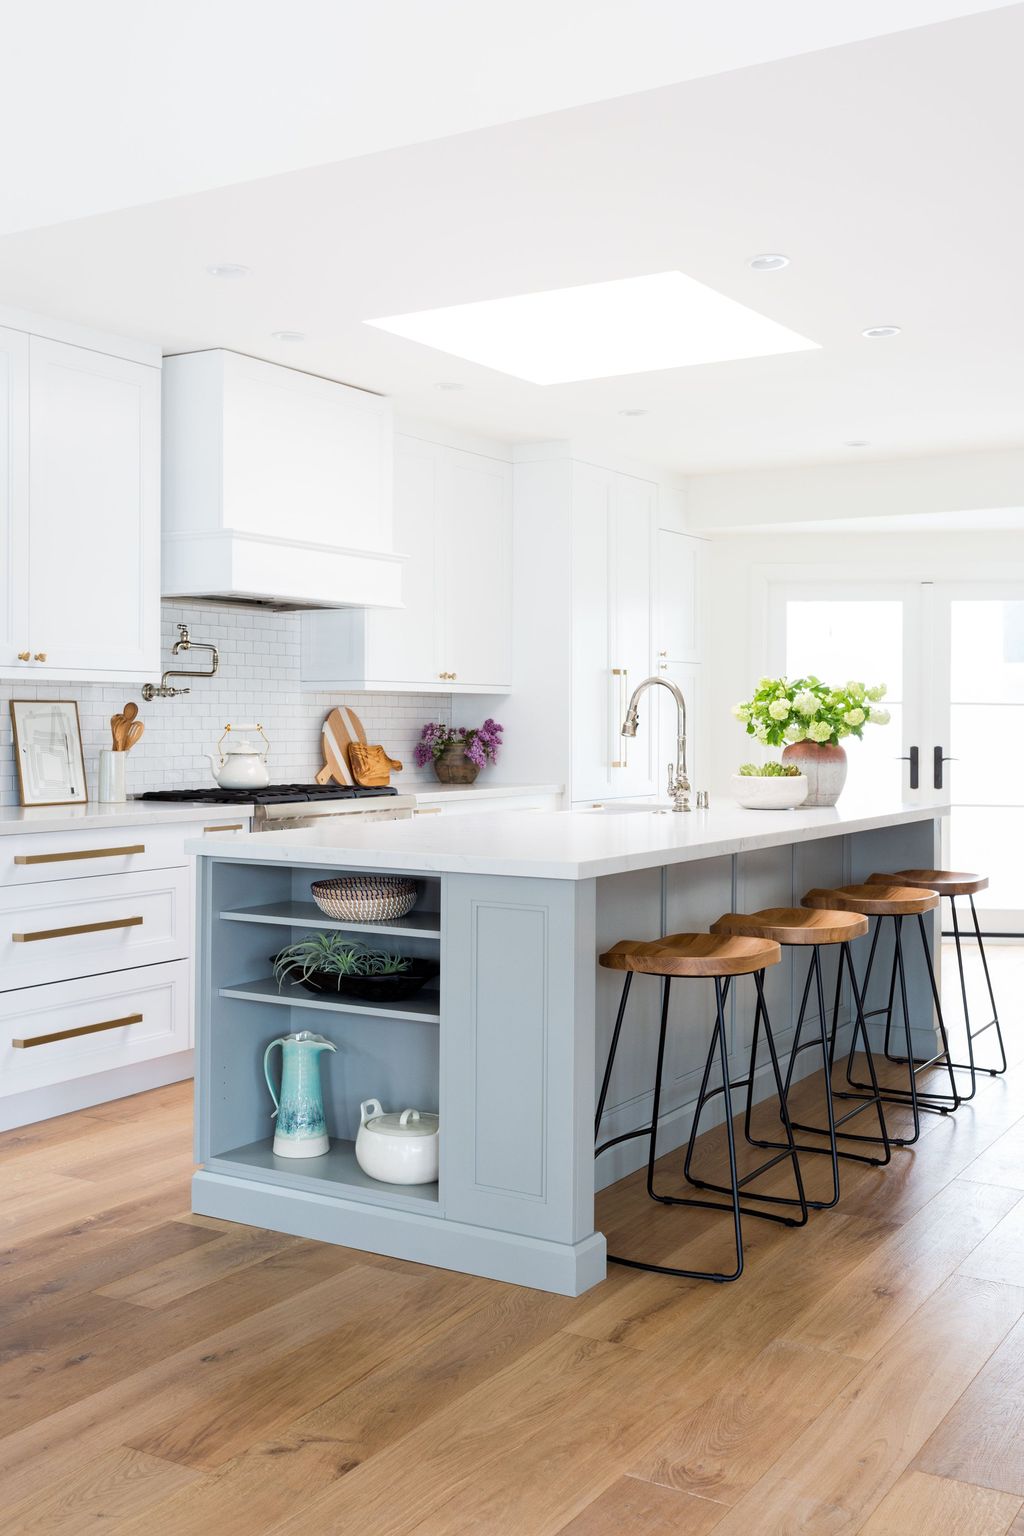 32-popular-apartment-kitchen-design-ideas-you-should-copy-pimphomee